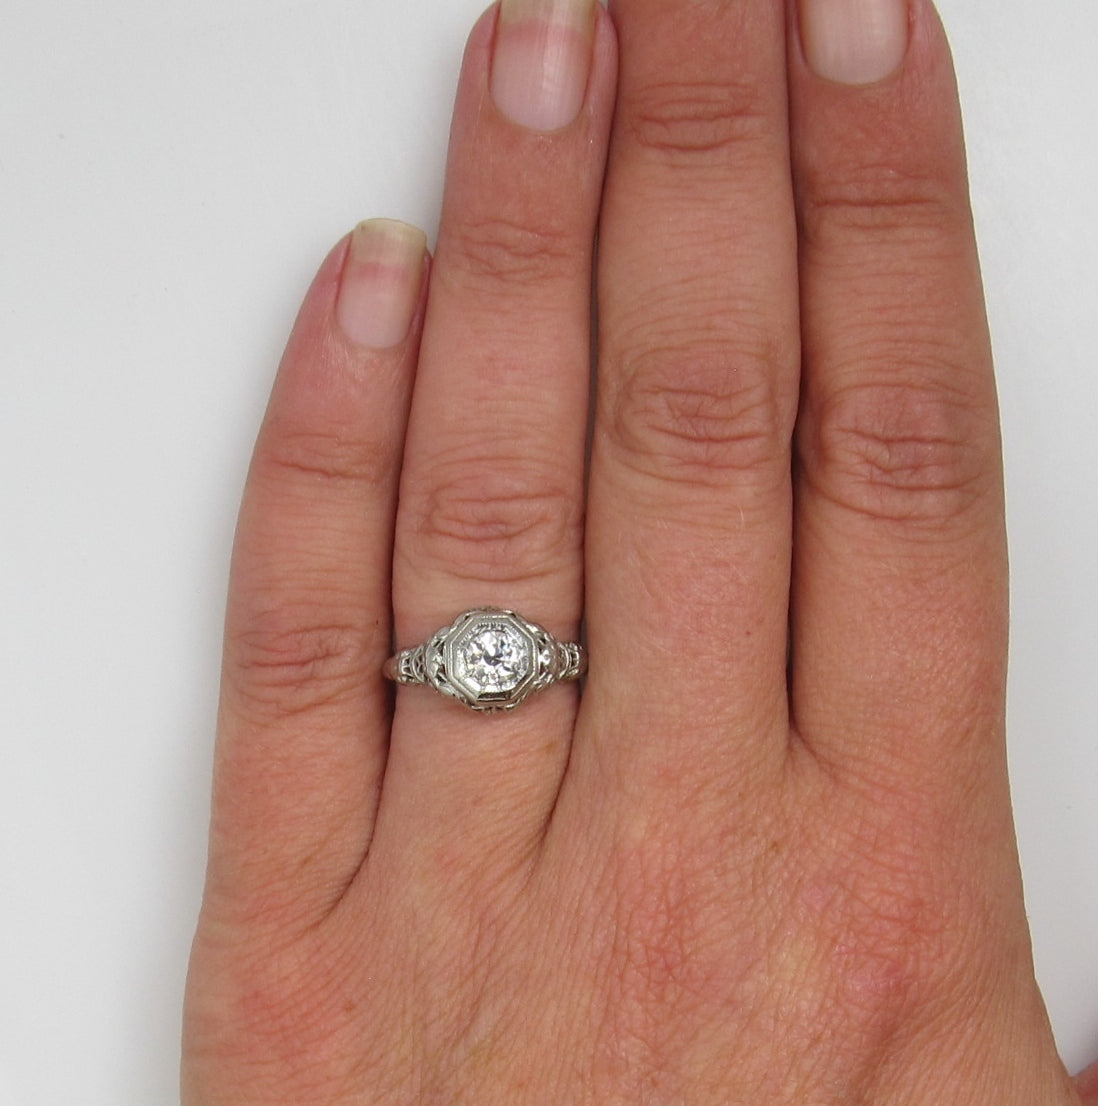 18k White Gold Filigree Ring With A .43ct Diamond, Vs2, H-i. Circa 1920